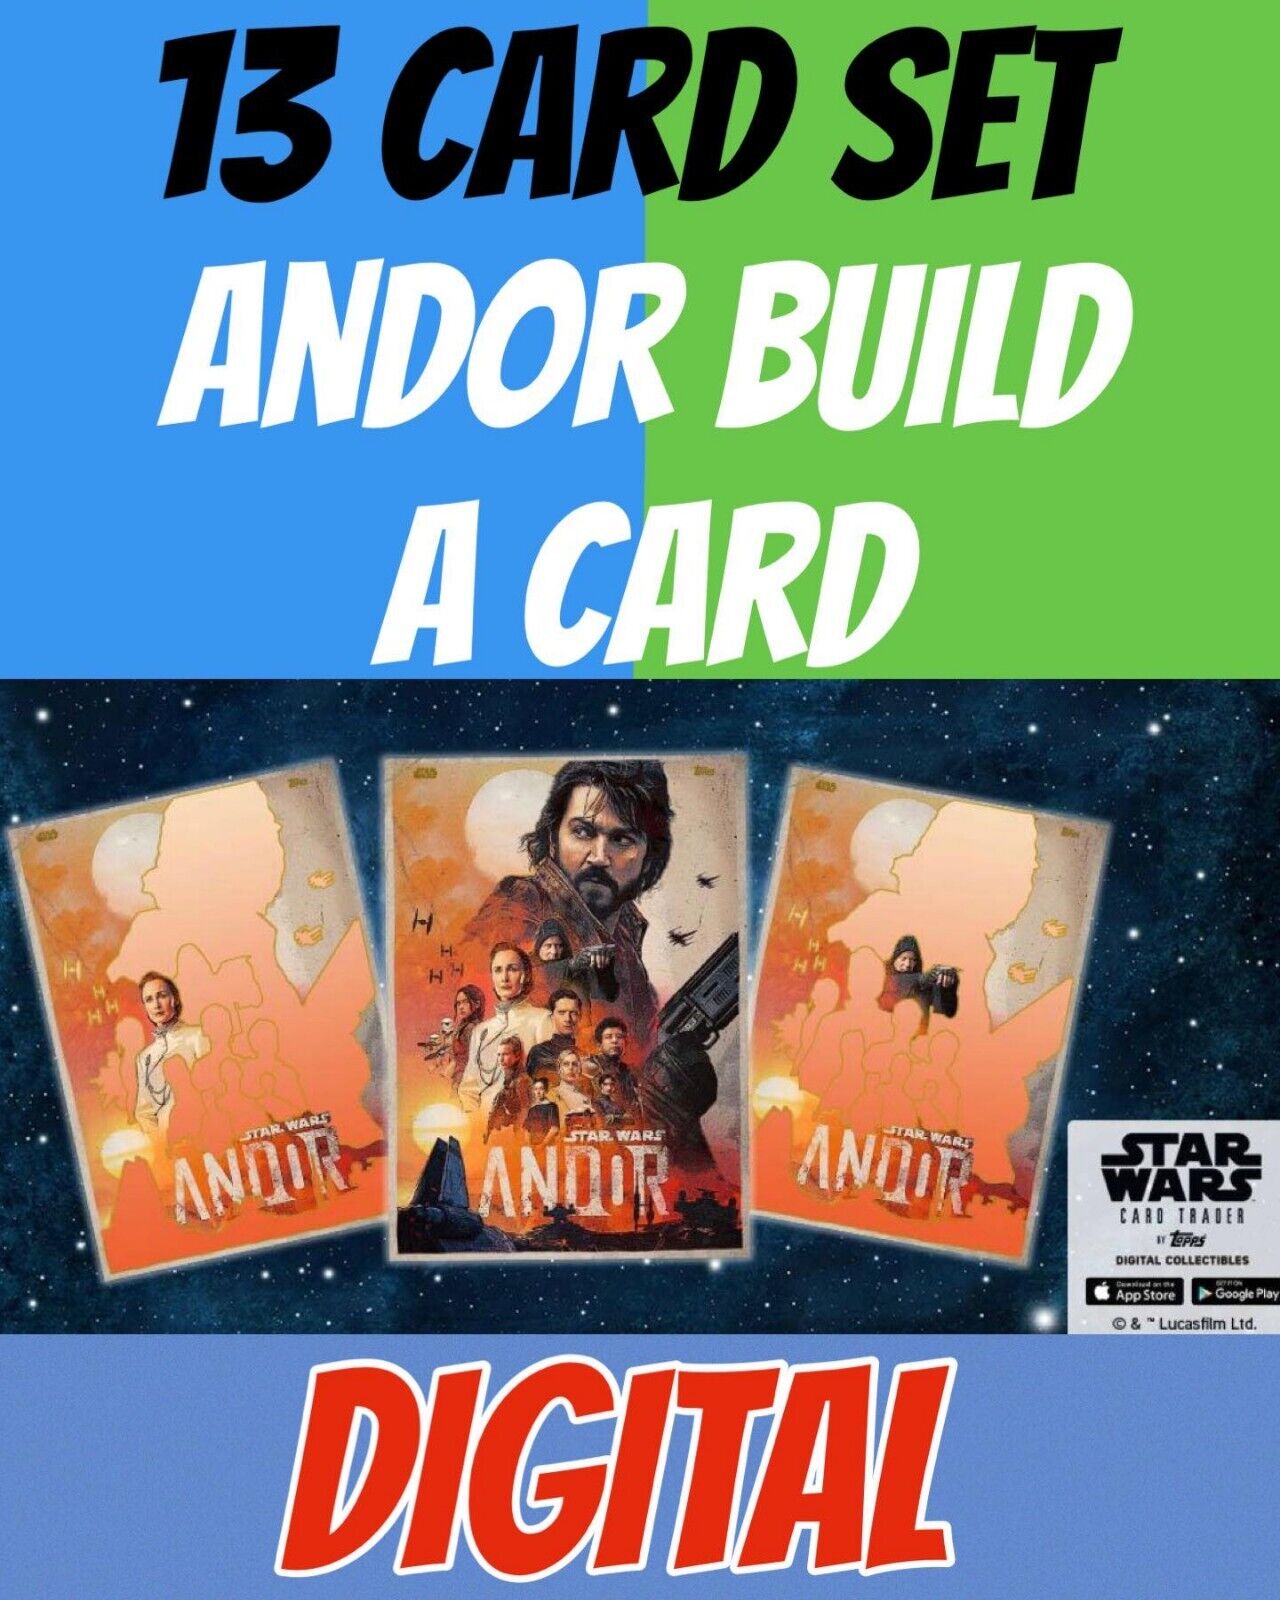 Andor Build a Card Pieces/Full Poster Award 13 Card Set Topps Star Wars Trader